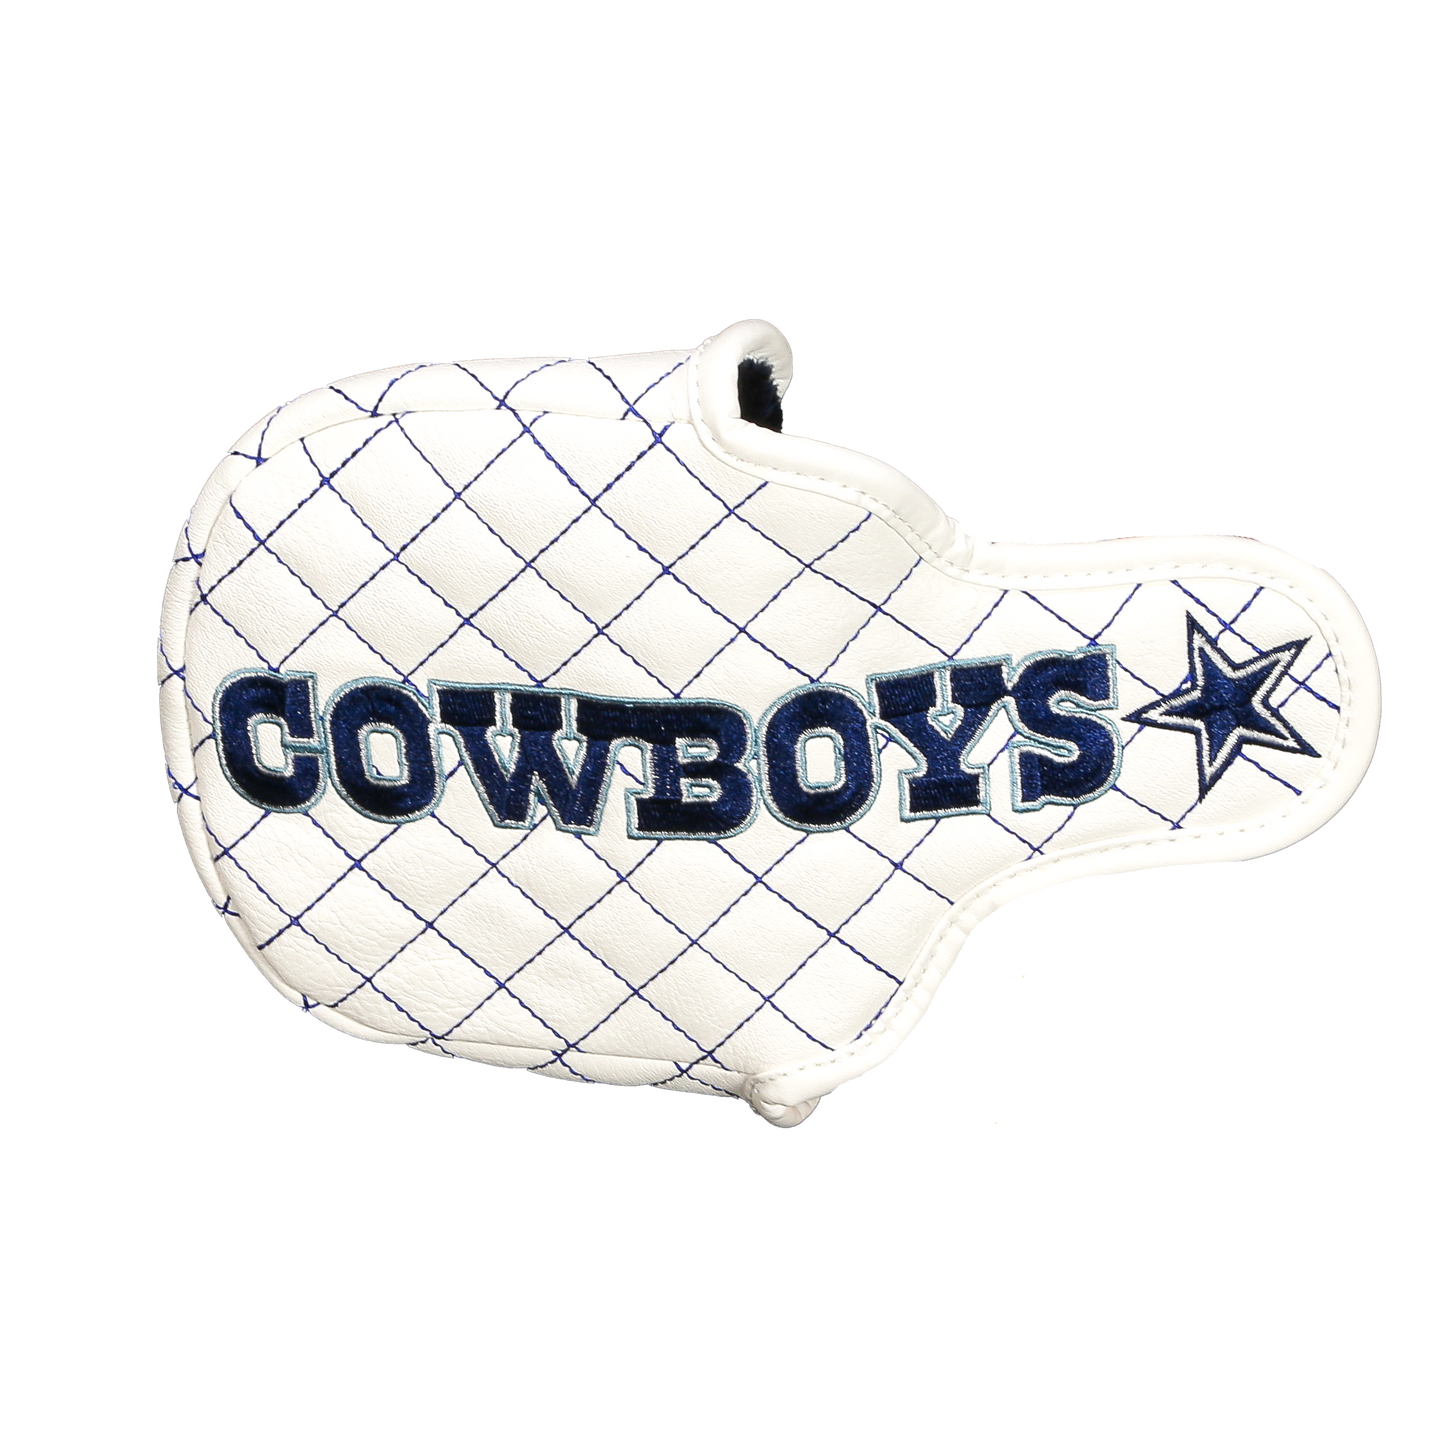 Dallas "Cowboys" Mallet Putter Cover